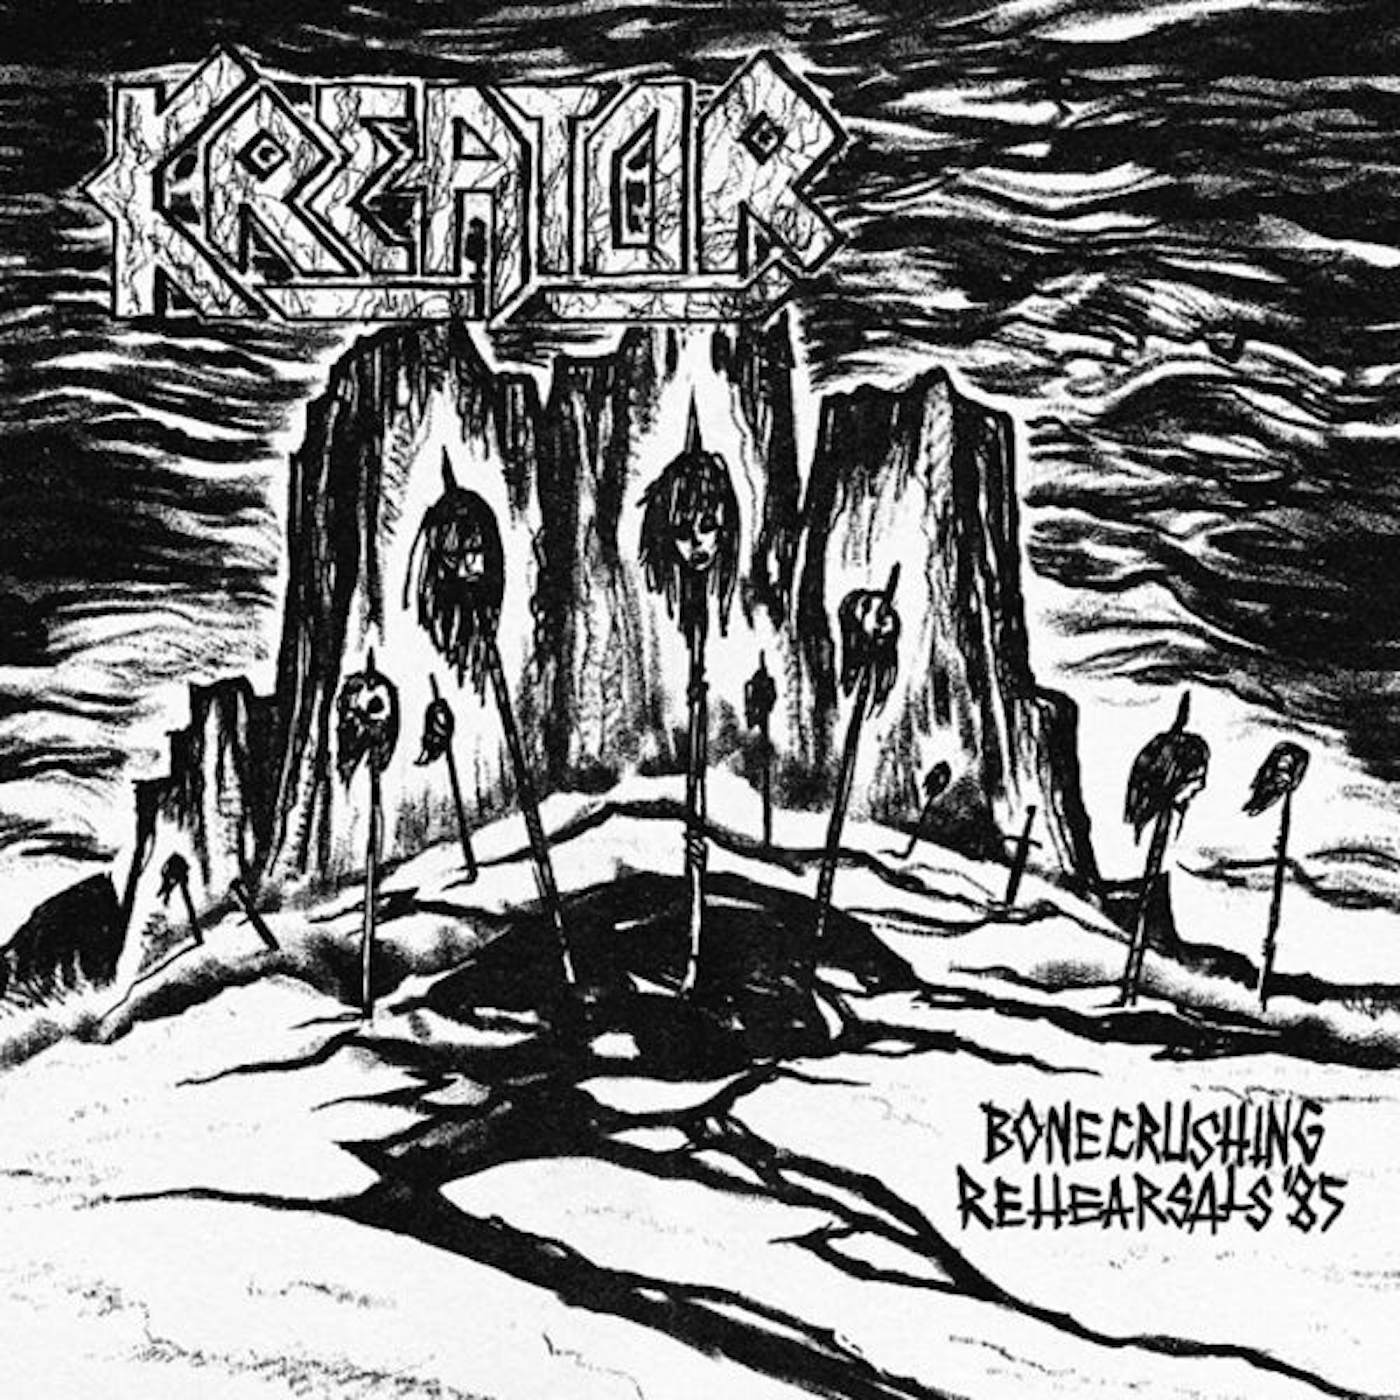 Kreator LP - Bonecrushing Rehersals '85 (Vinyl)